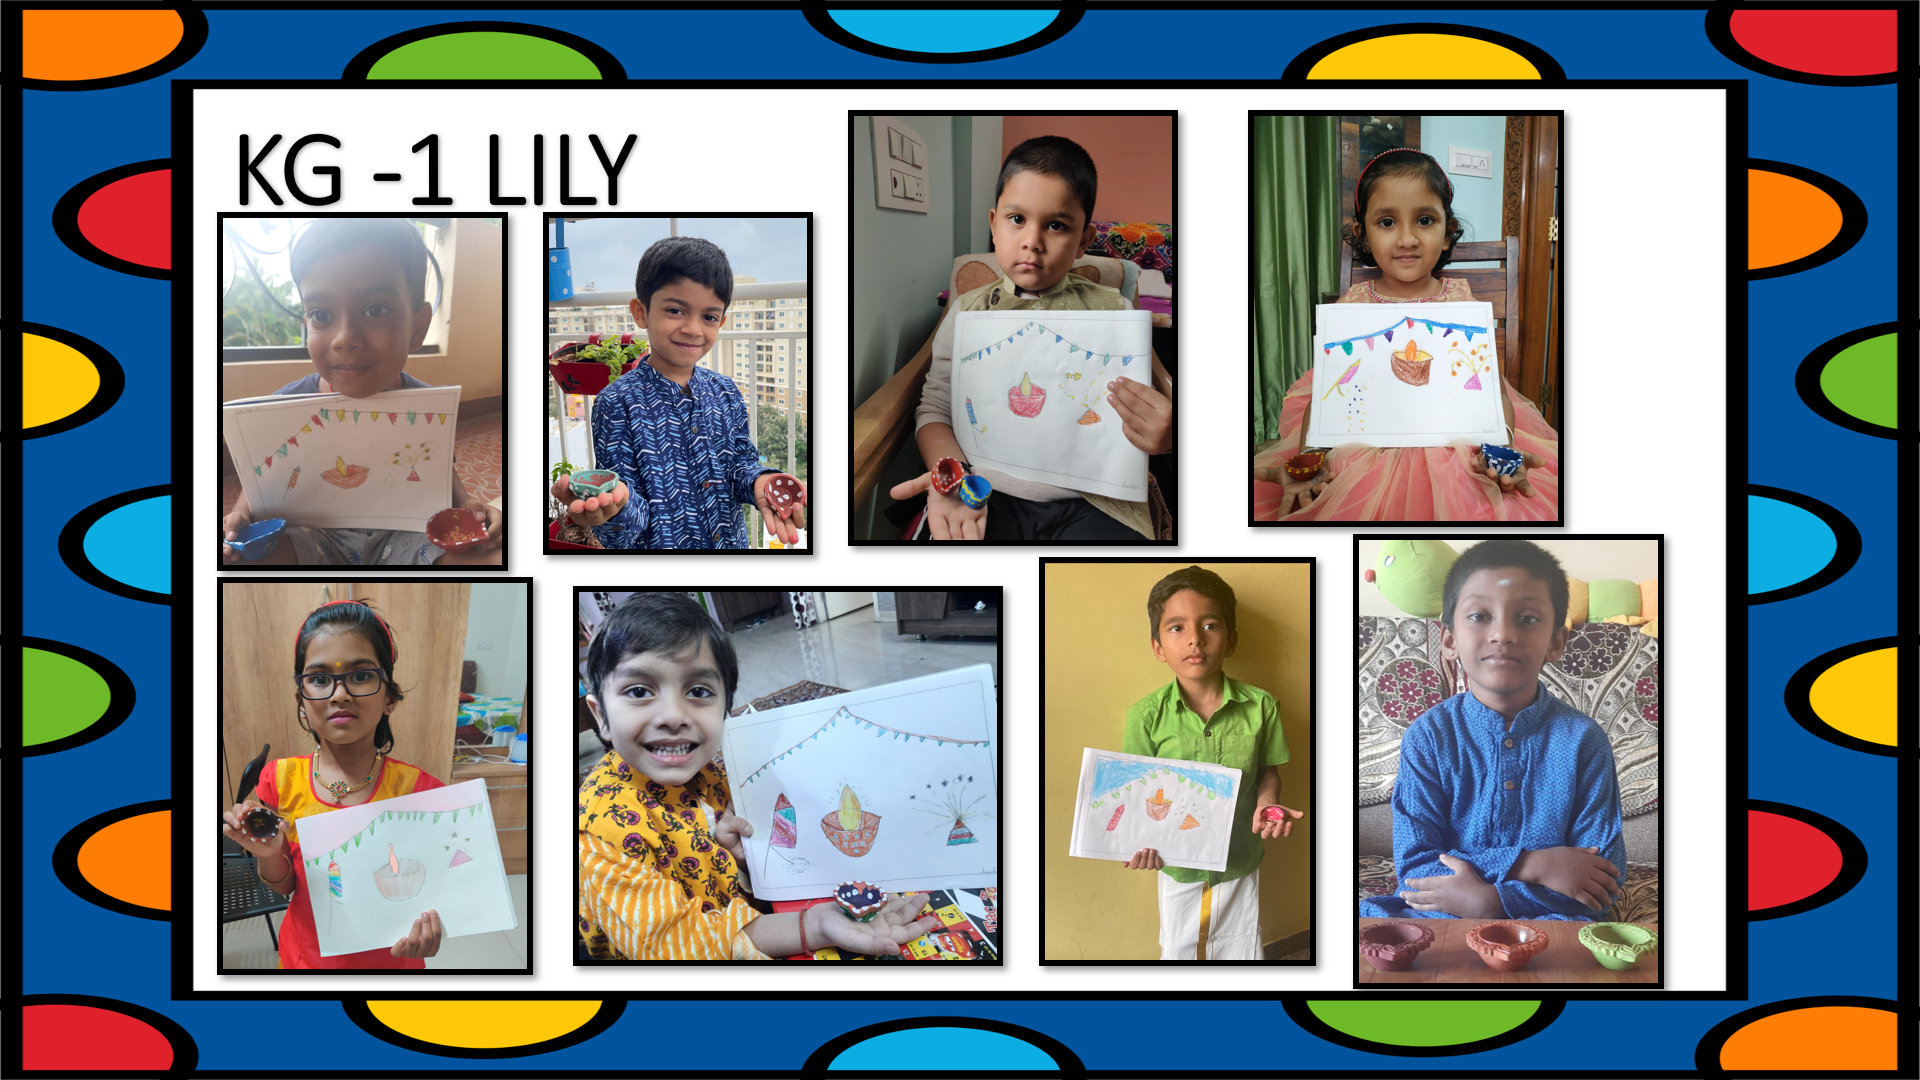 Diwali Diyas - Diwali Greeting Card for Kids | Mocomi